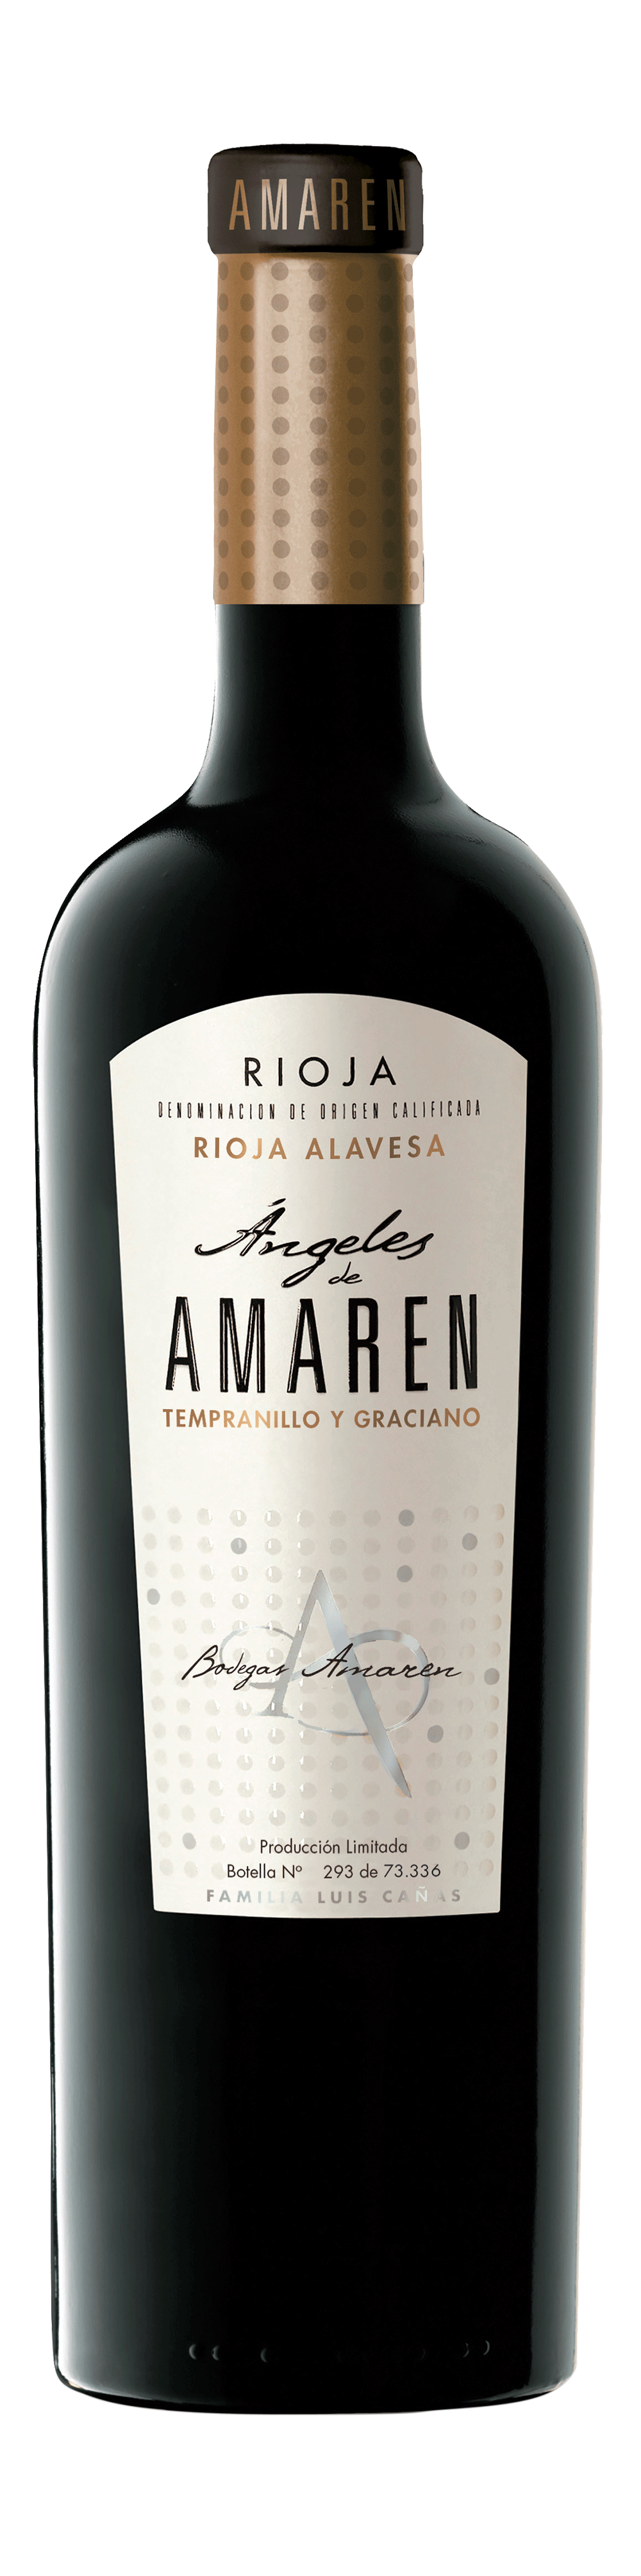 Bodegas Amaren, Ángeles de Amaren, Rioja, Spain, 2019